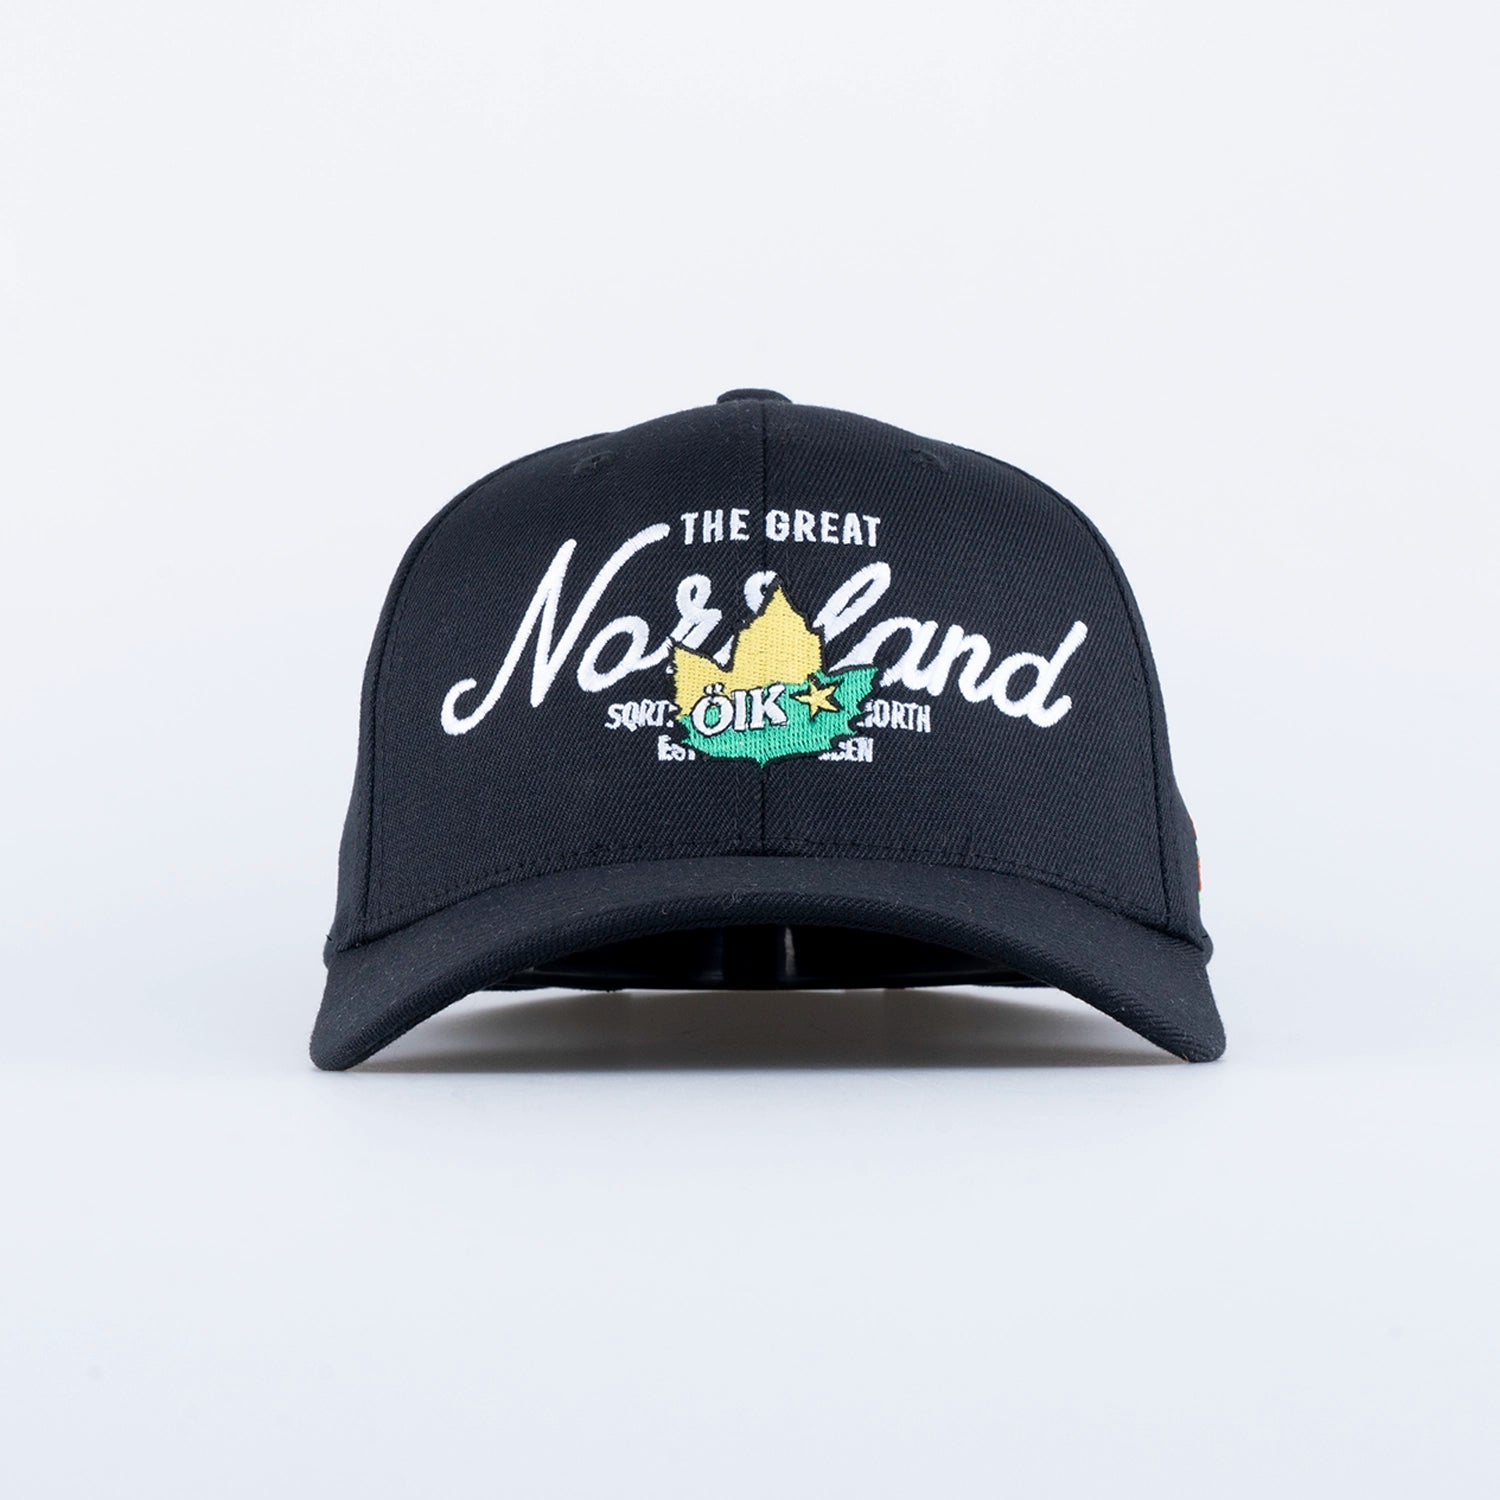 GREAT NORRLAND 120 CAP - ÖIK BLACK